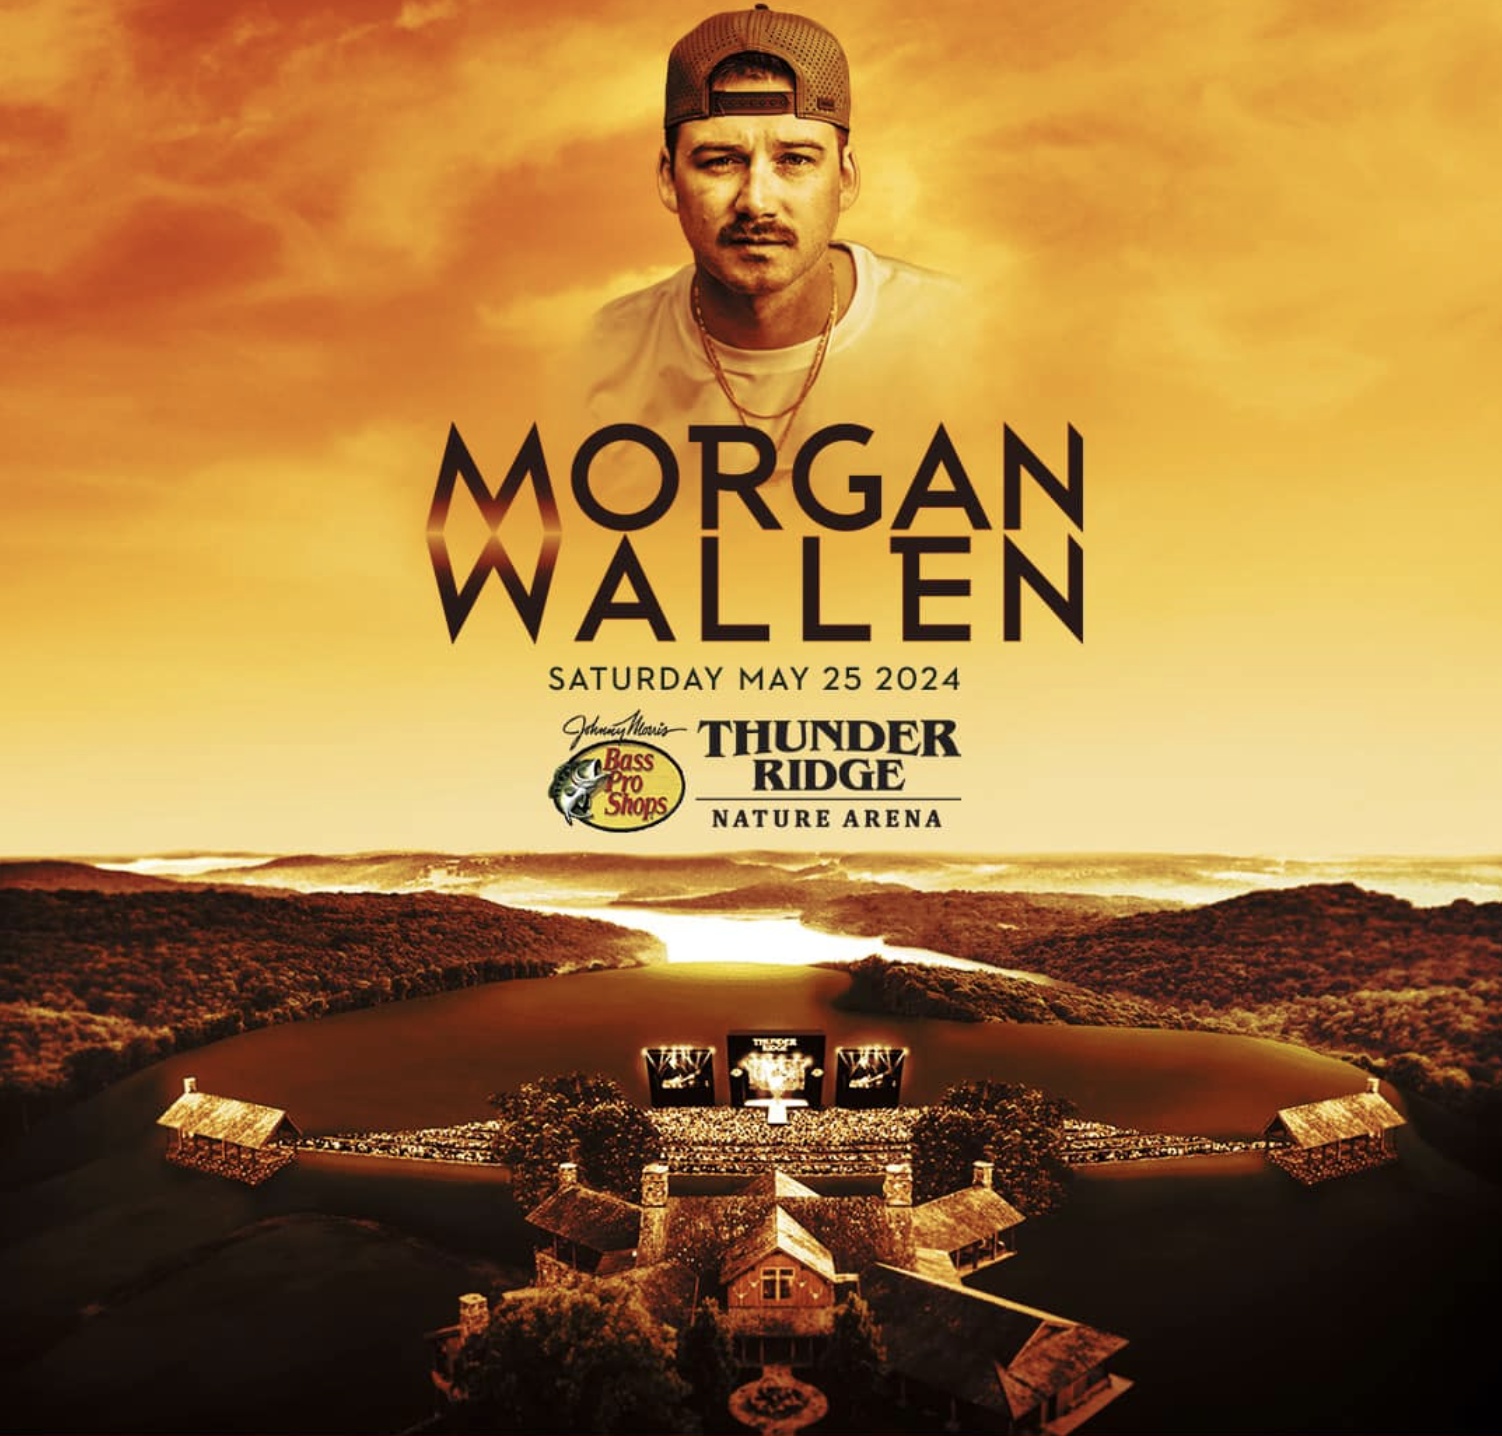 Come see Morgan Wallen at Thunder Ridge Arena